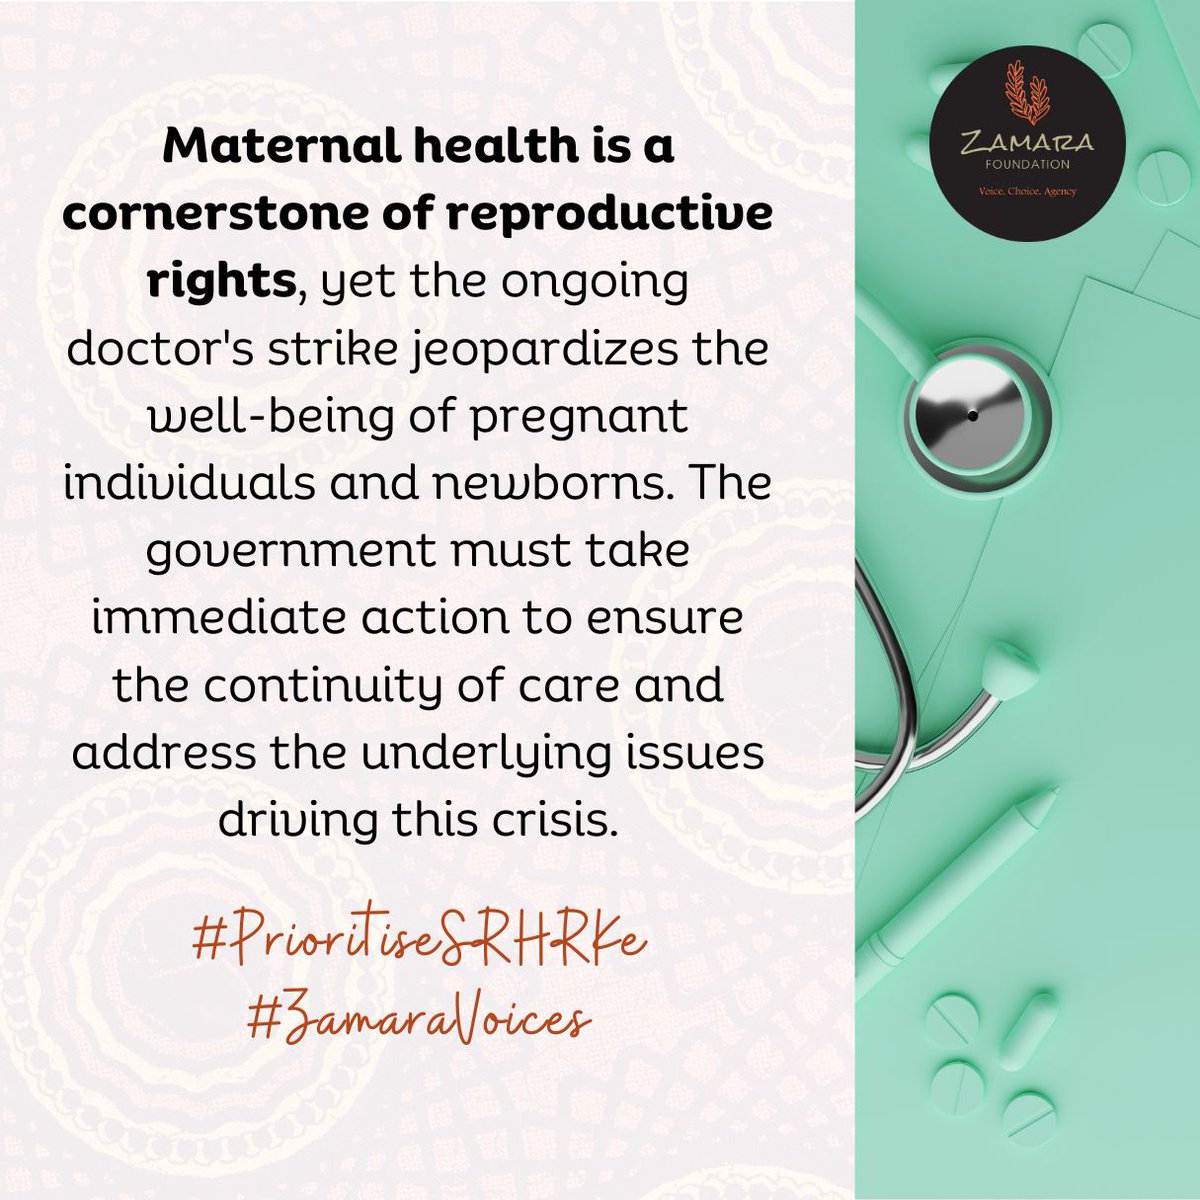 Continuity of care is essential to ensure maternal health #PrioritiseSRHRKe #zamaravoices @Zamara_fdn